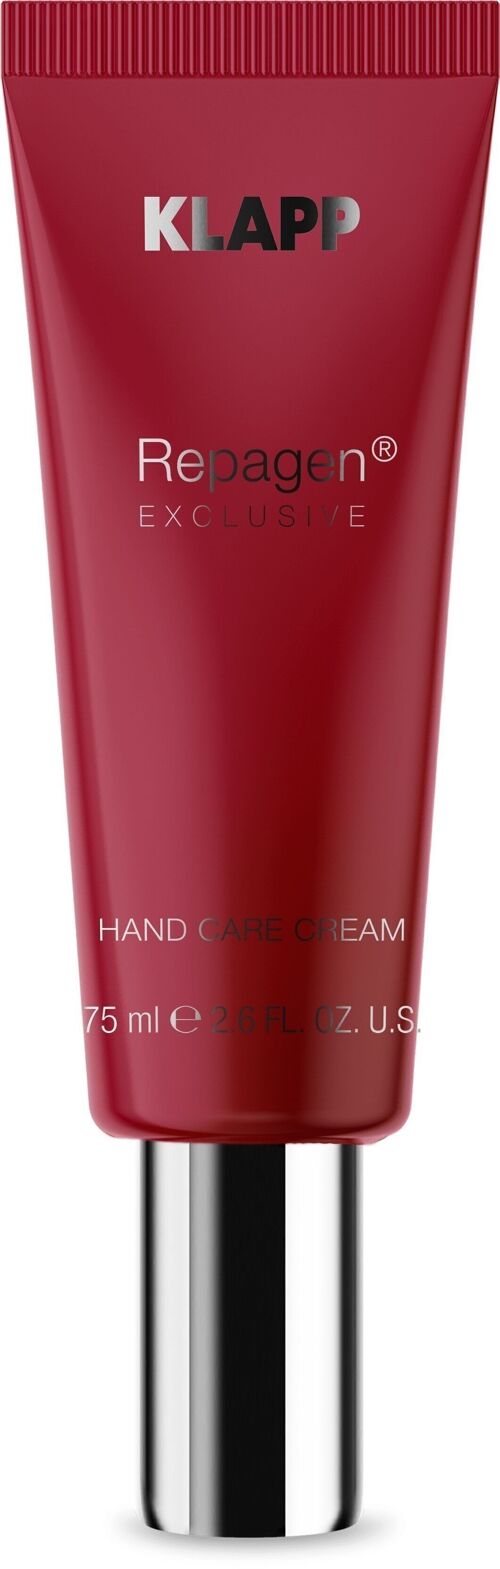 Hand Care Cream 75ml